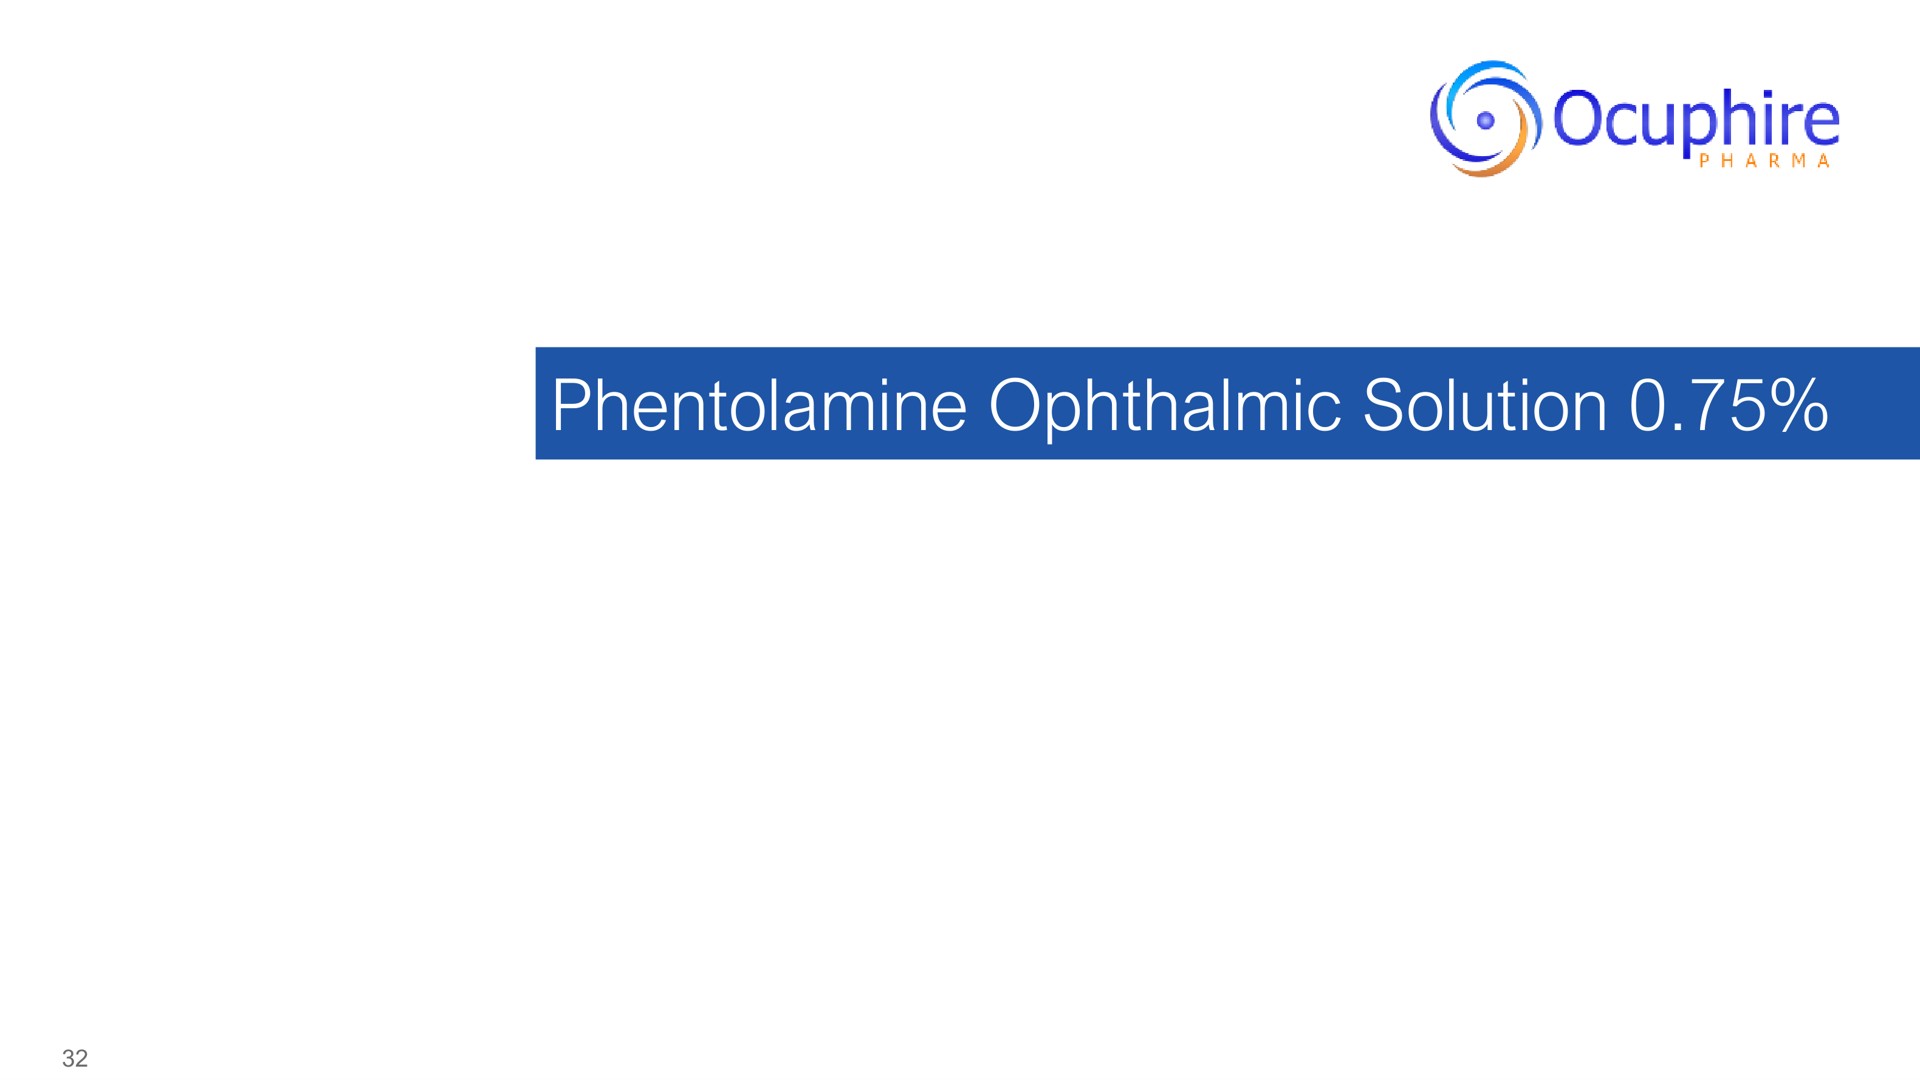 ophthalmic solution | Ocuphire Pharma